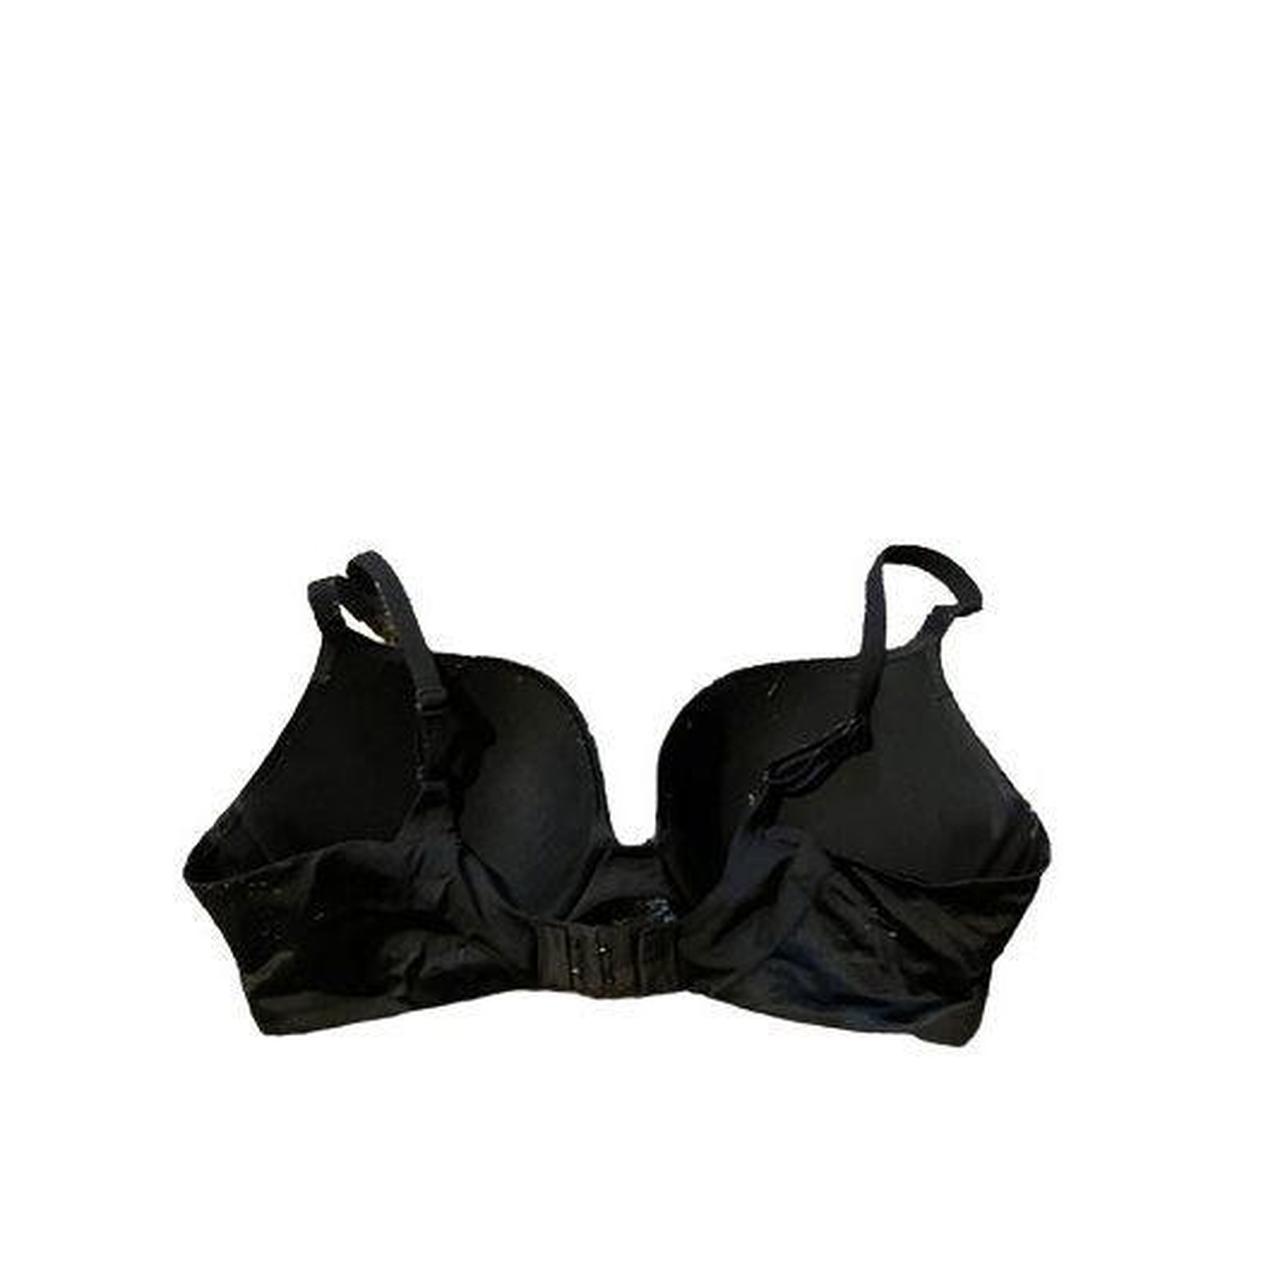 Victoria’s Secret push-up bra 36C, Black silky feel